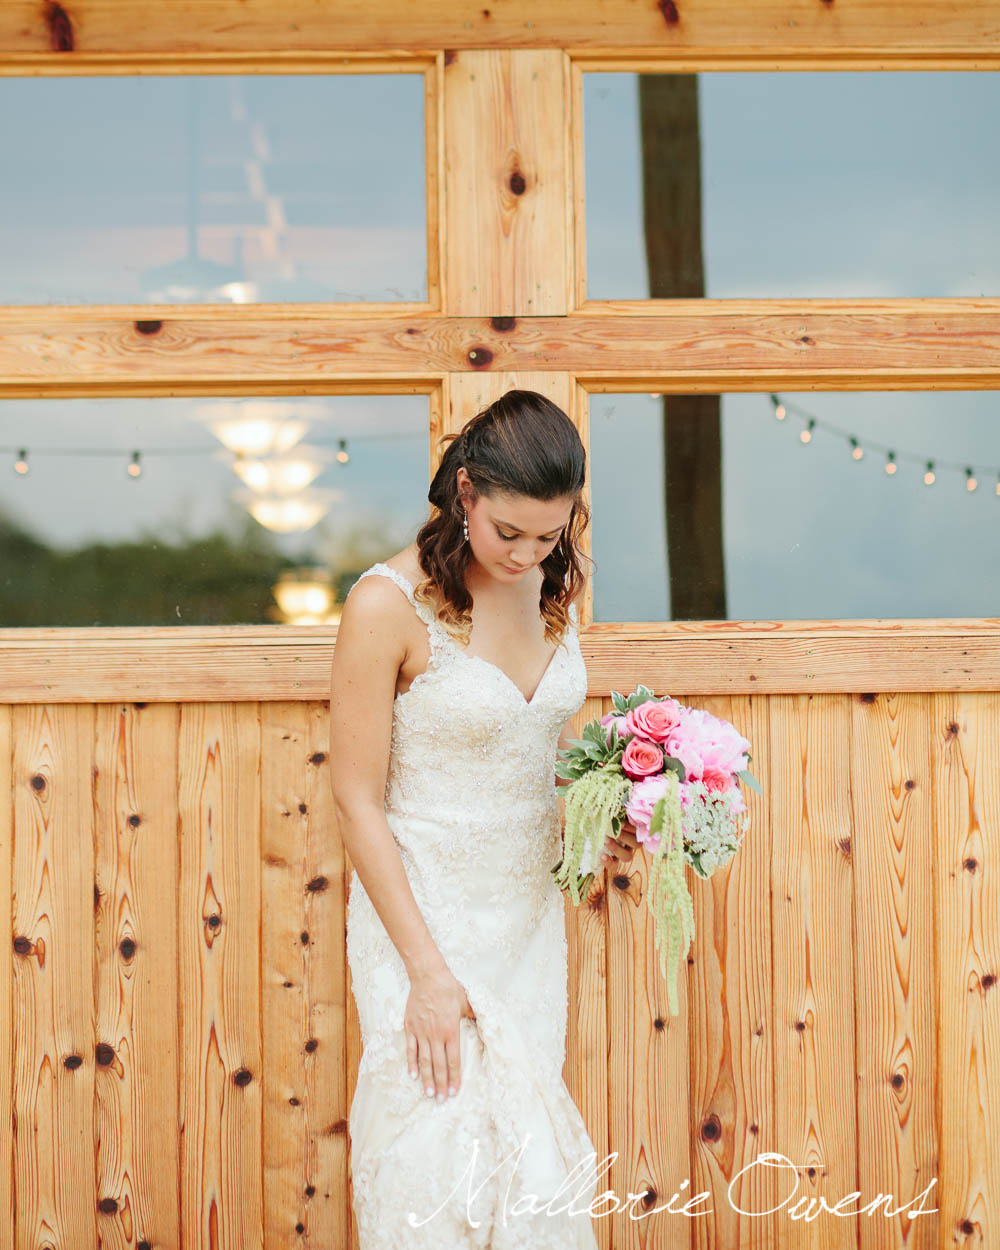 Austin Wedding Photography | MALLORIE OWENS